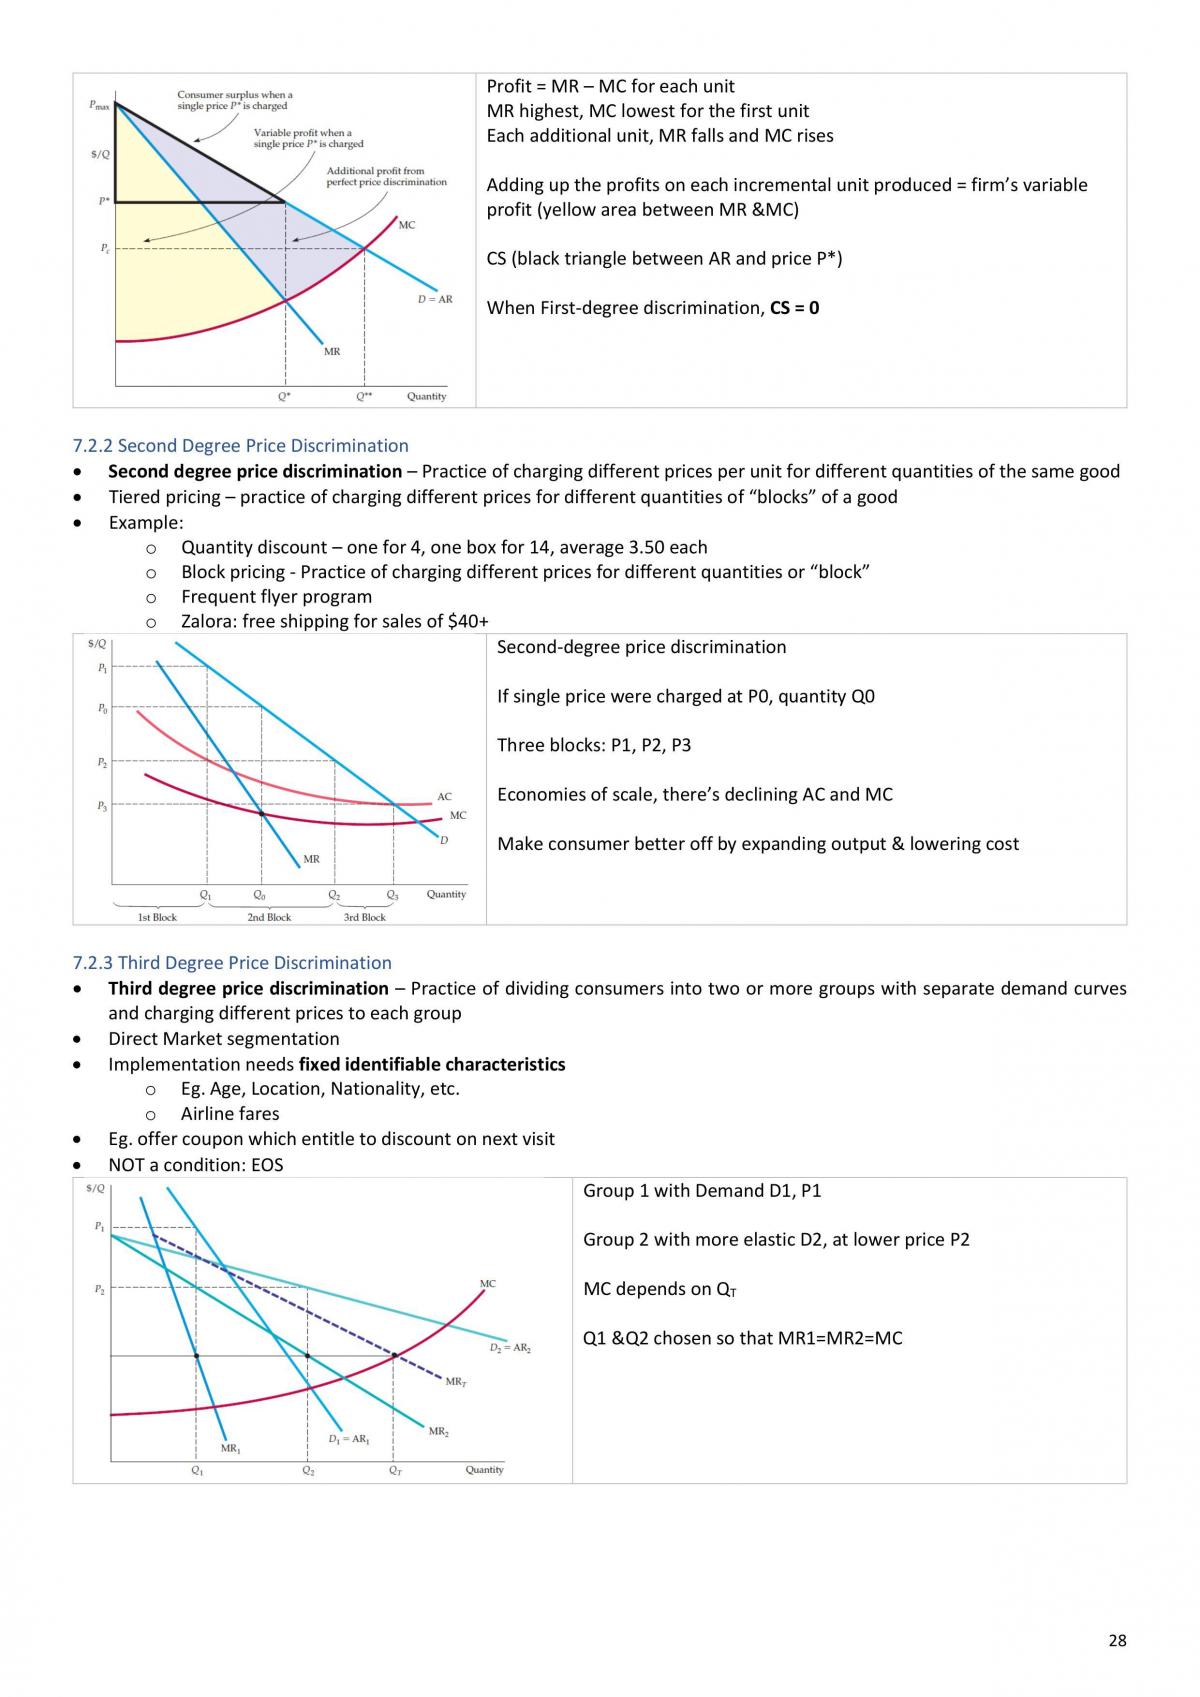 BSP1703 Managerial Economics Full Exam Notes - Page 28